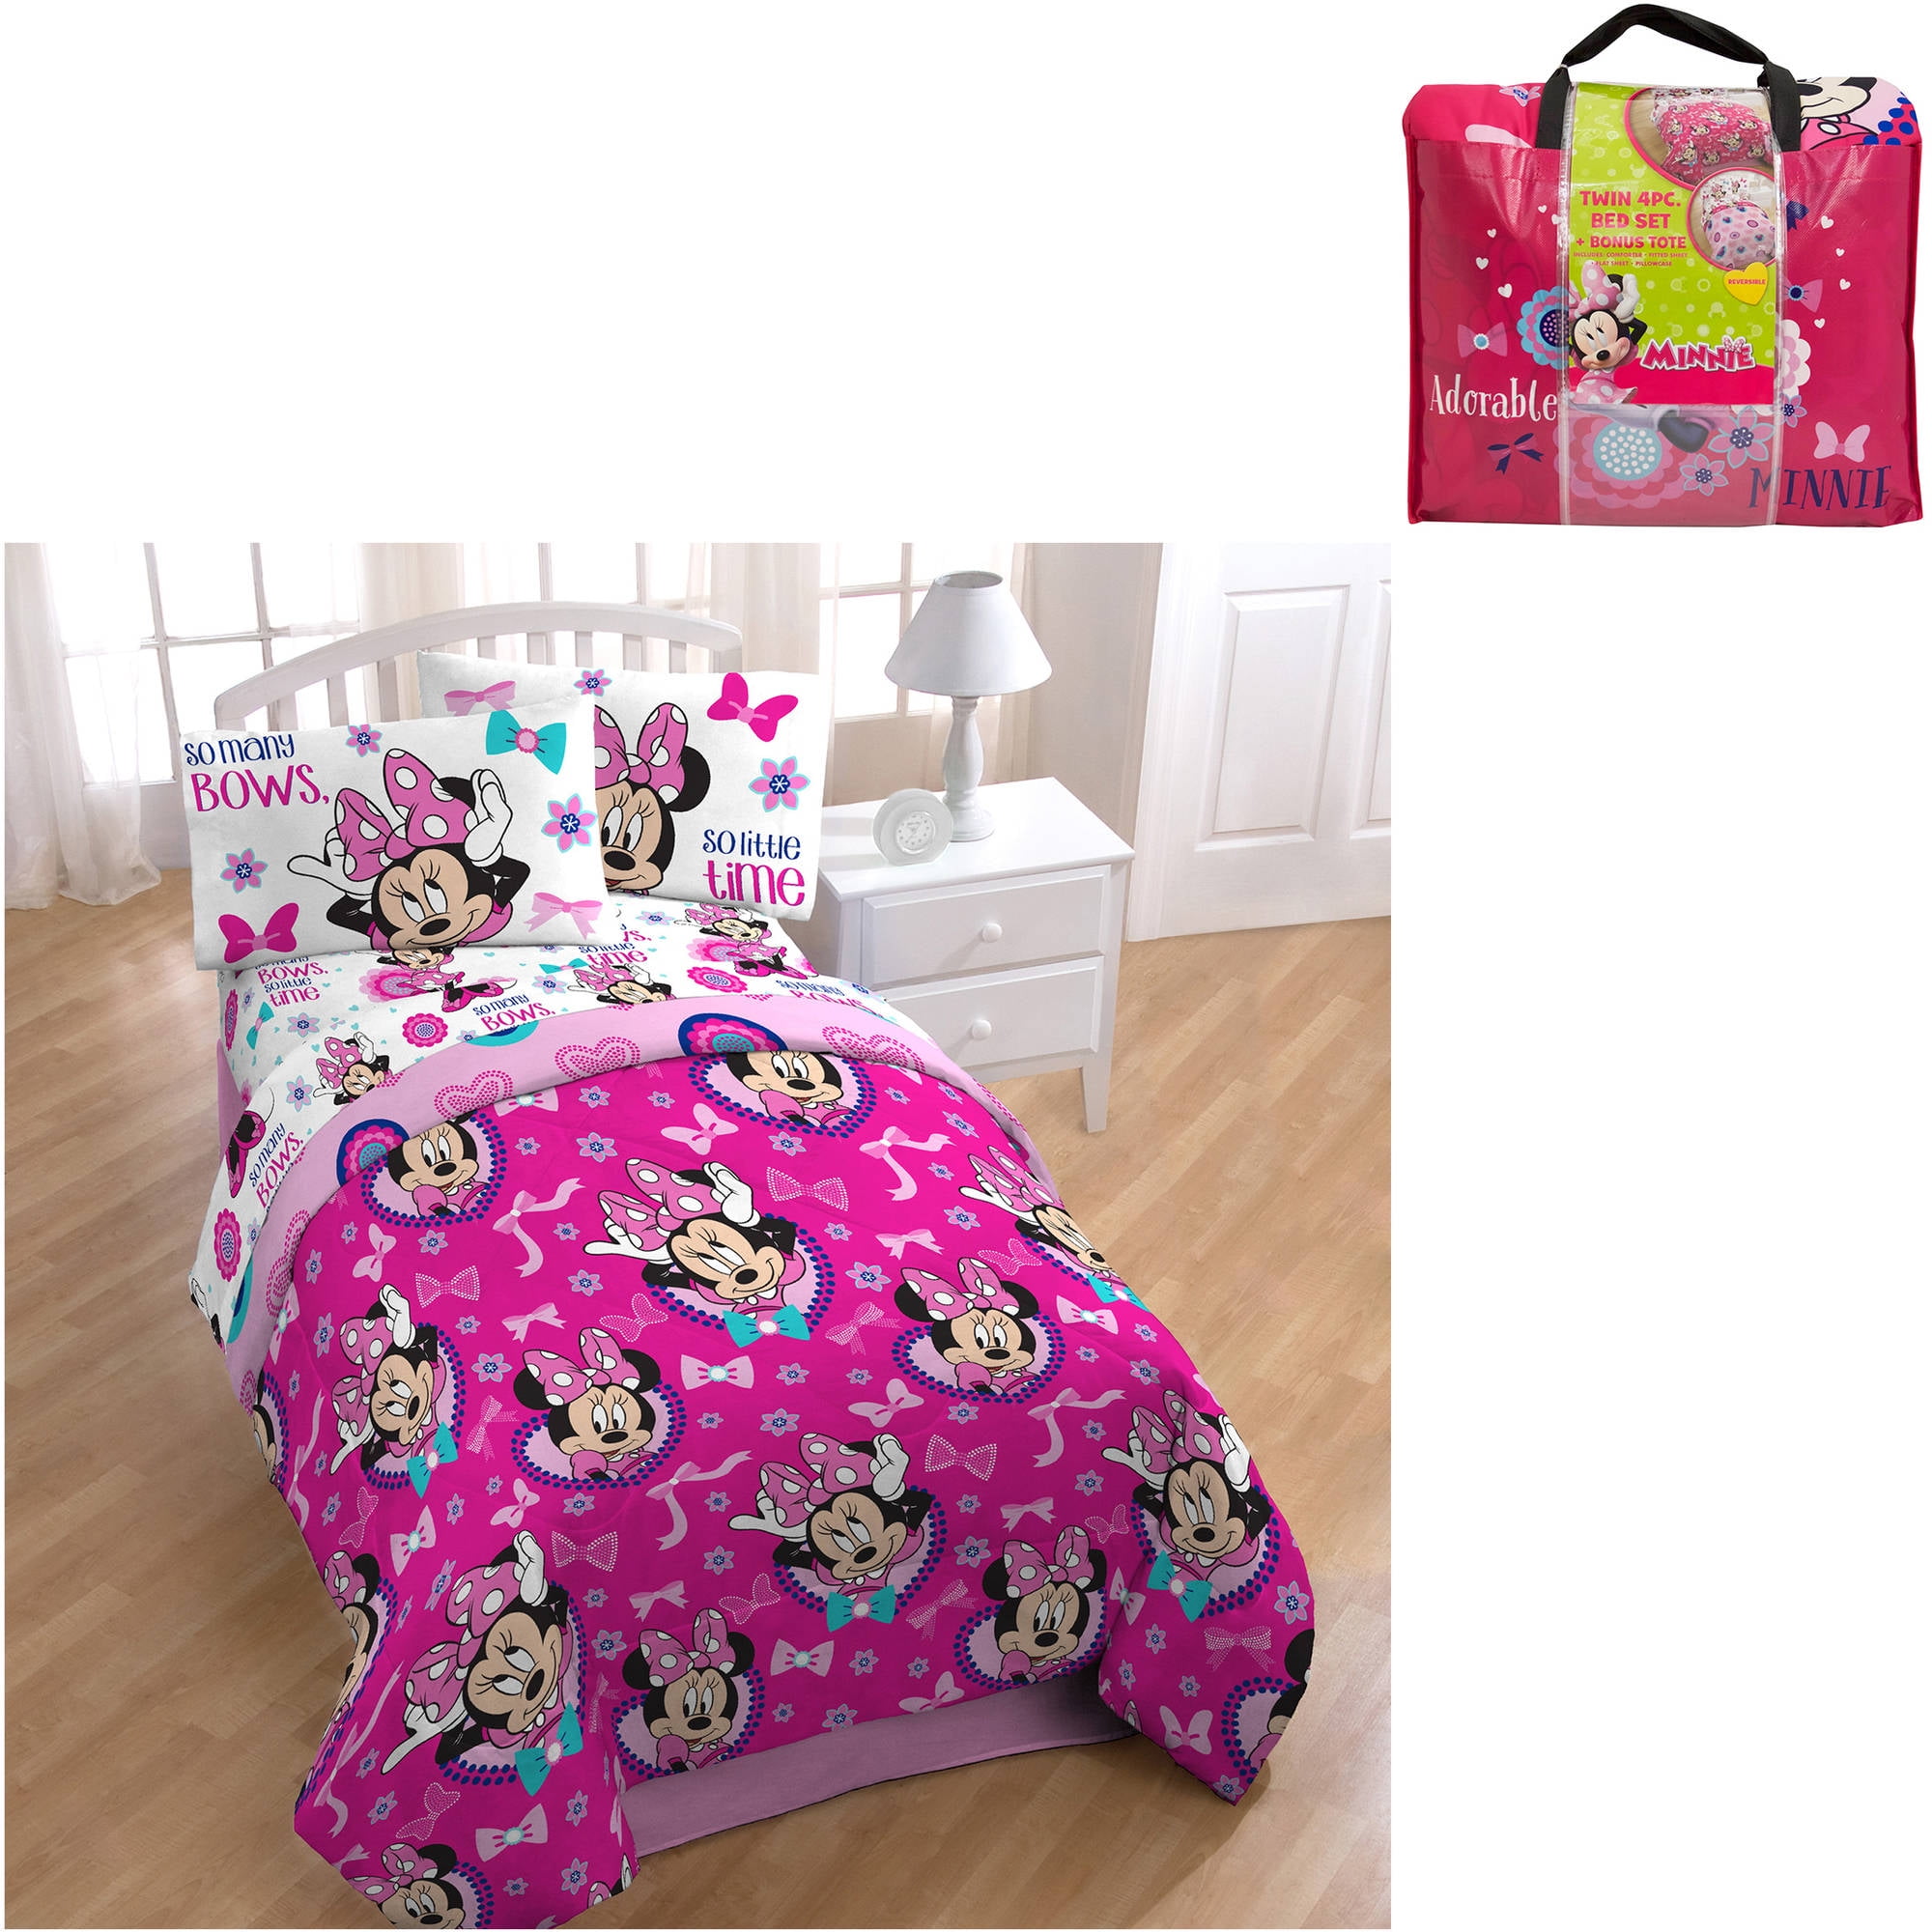 Blanket 4/ 6 pc Disney MINNIE MOUSE Comforter Sheet Set MINNIE Plush Doll 